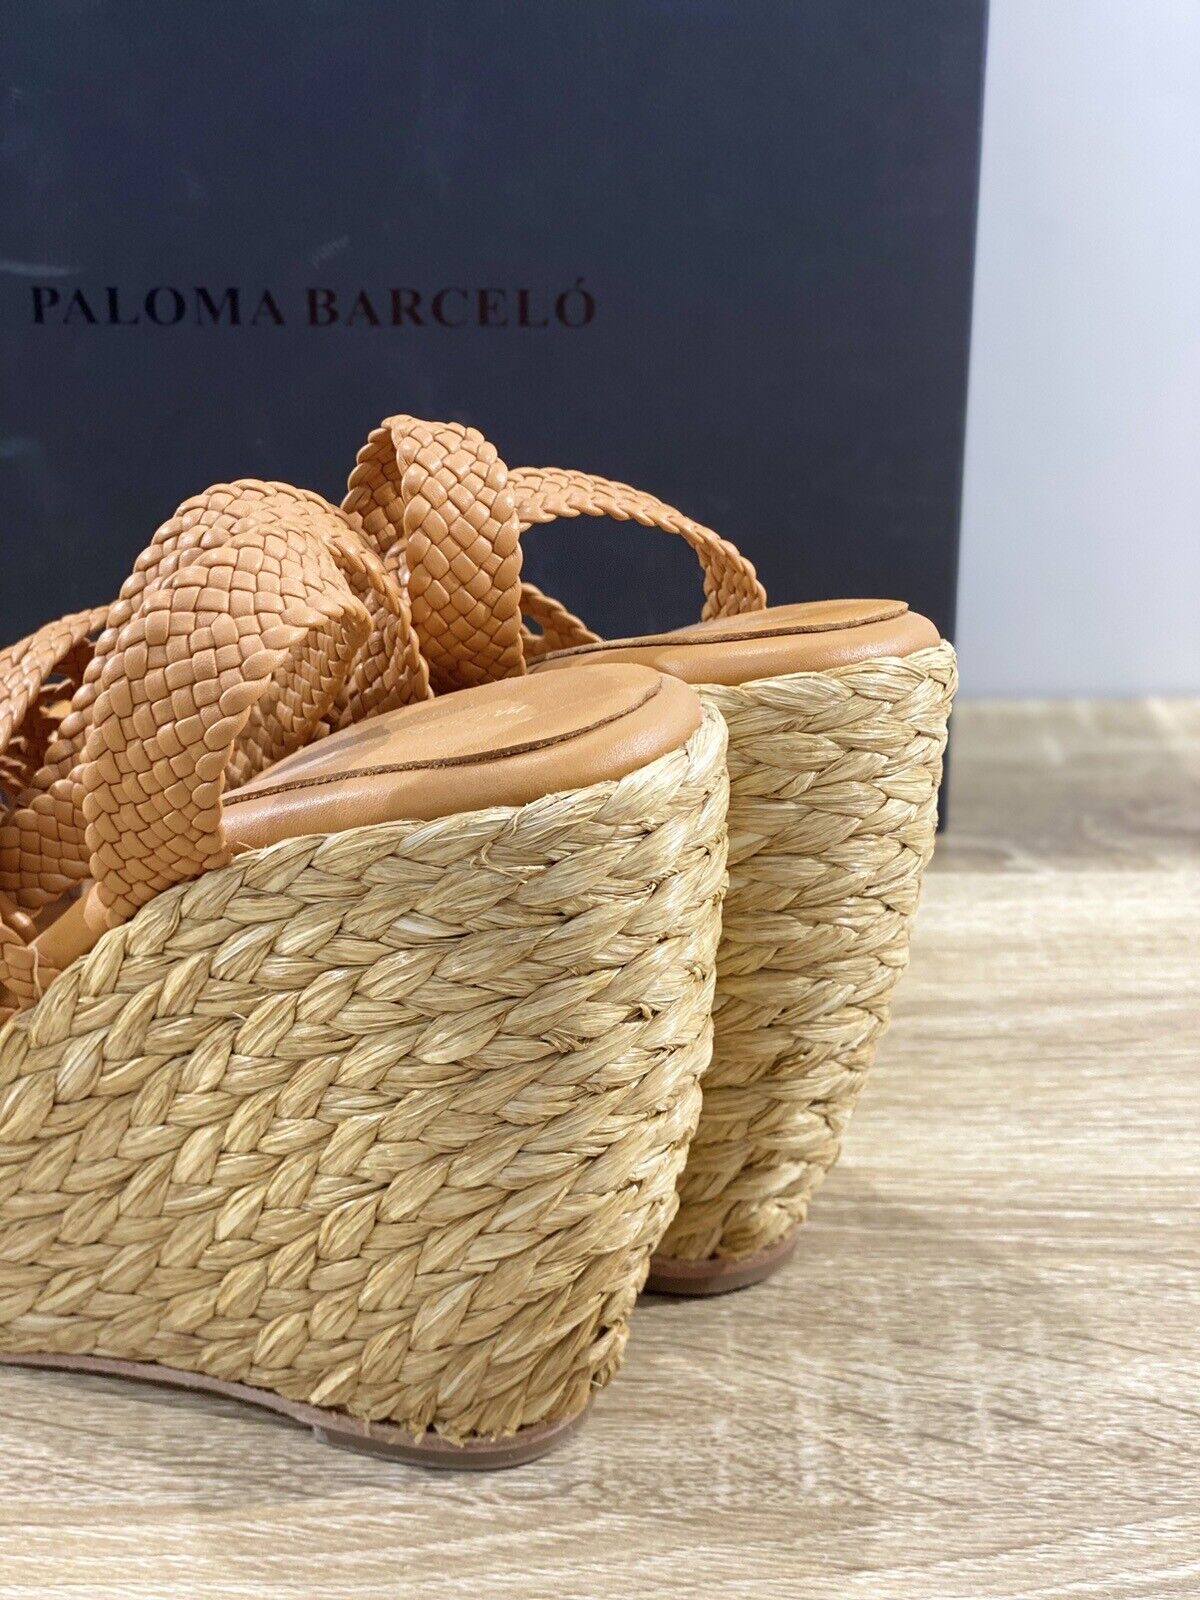 Paloma BARCELO’ Sandalo Donna Paige Pelle Ocra Luxury Shoes 40